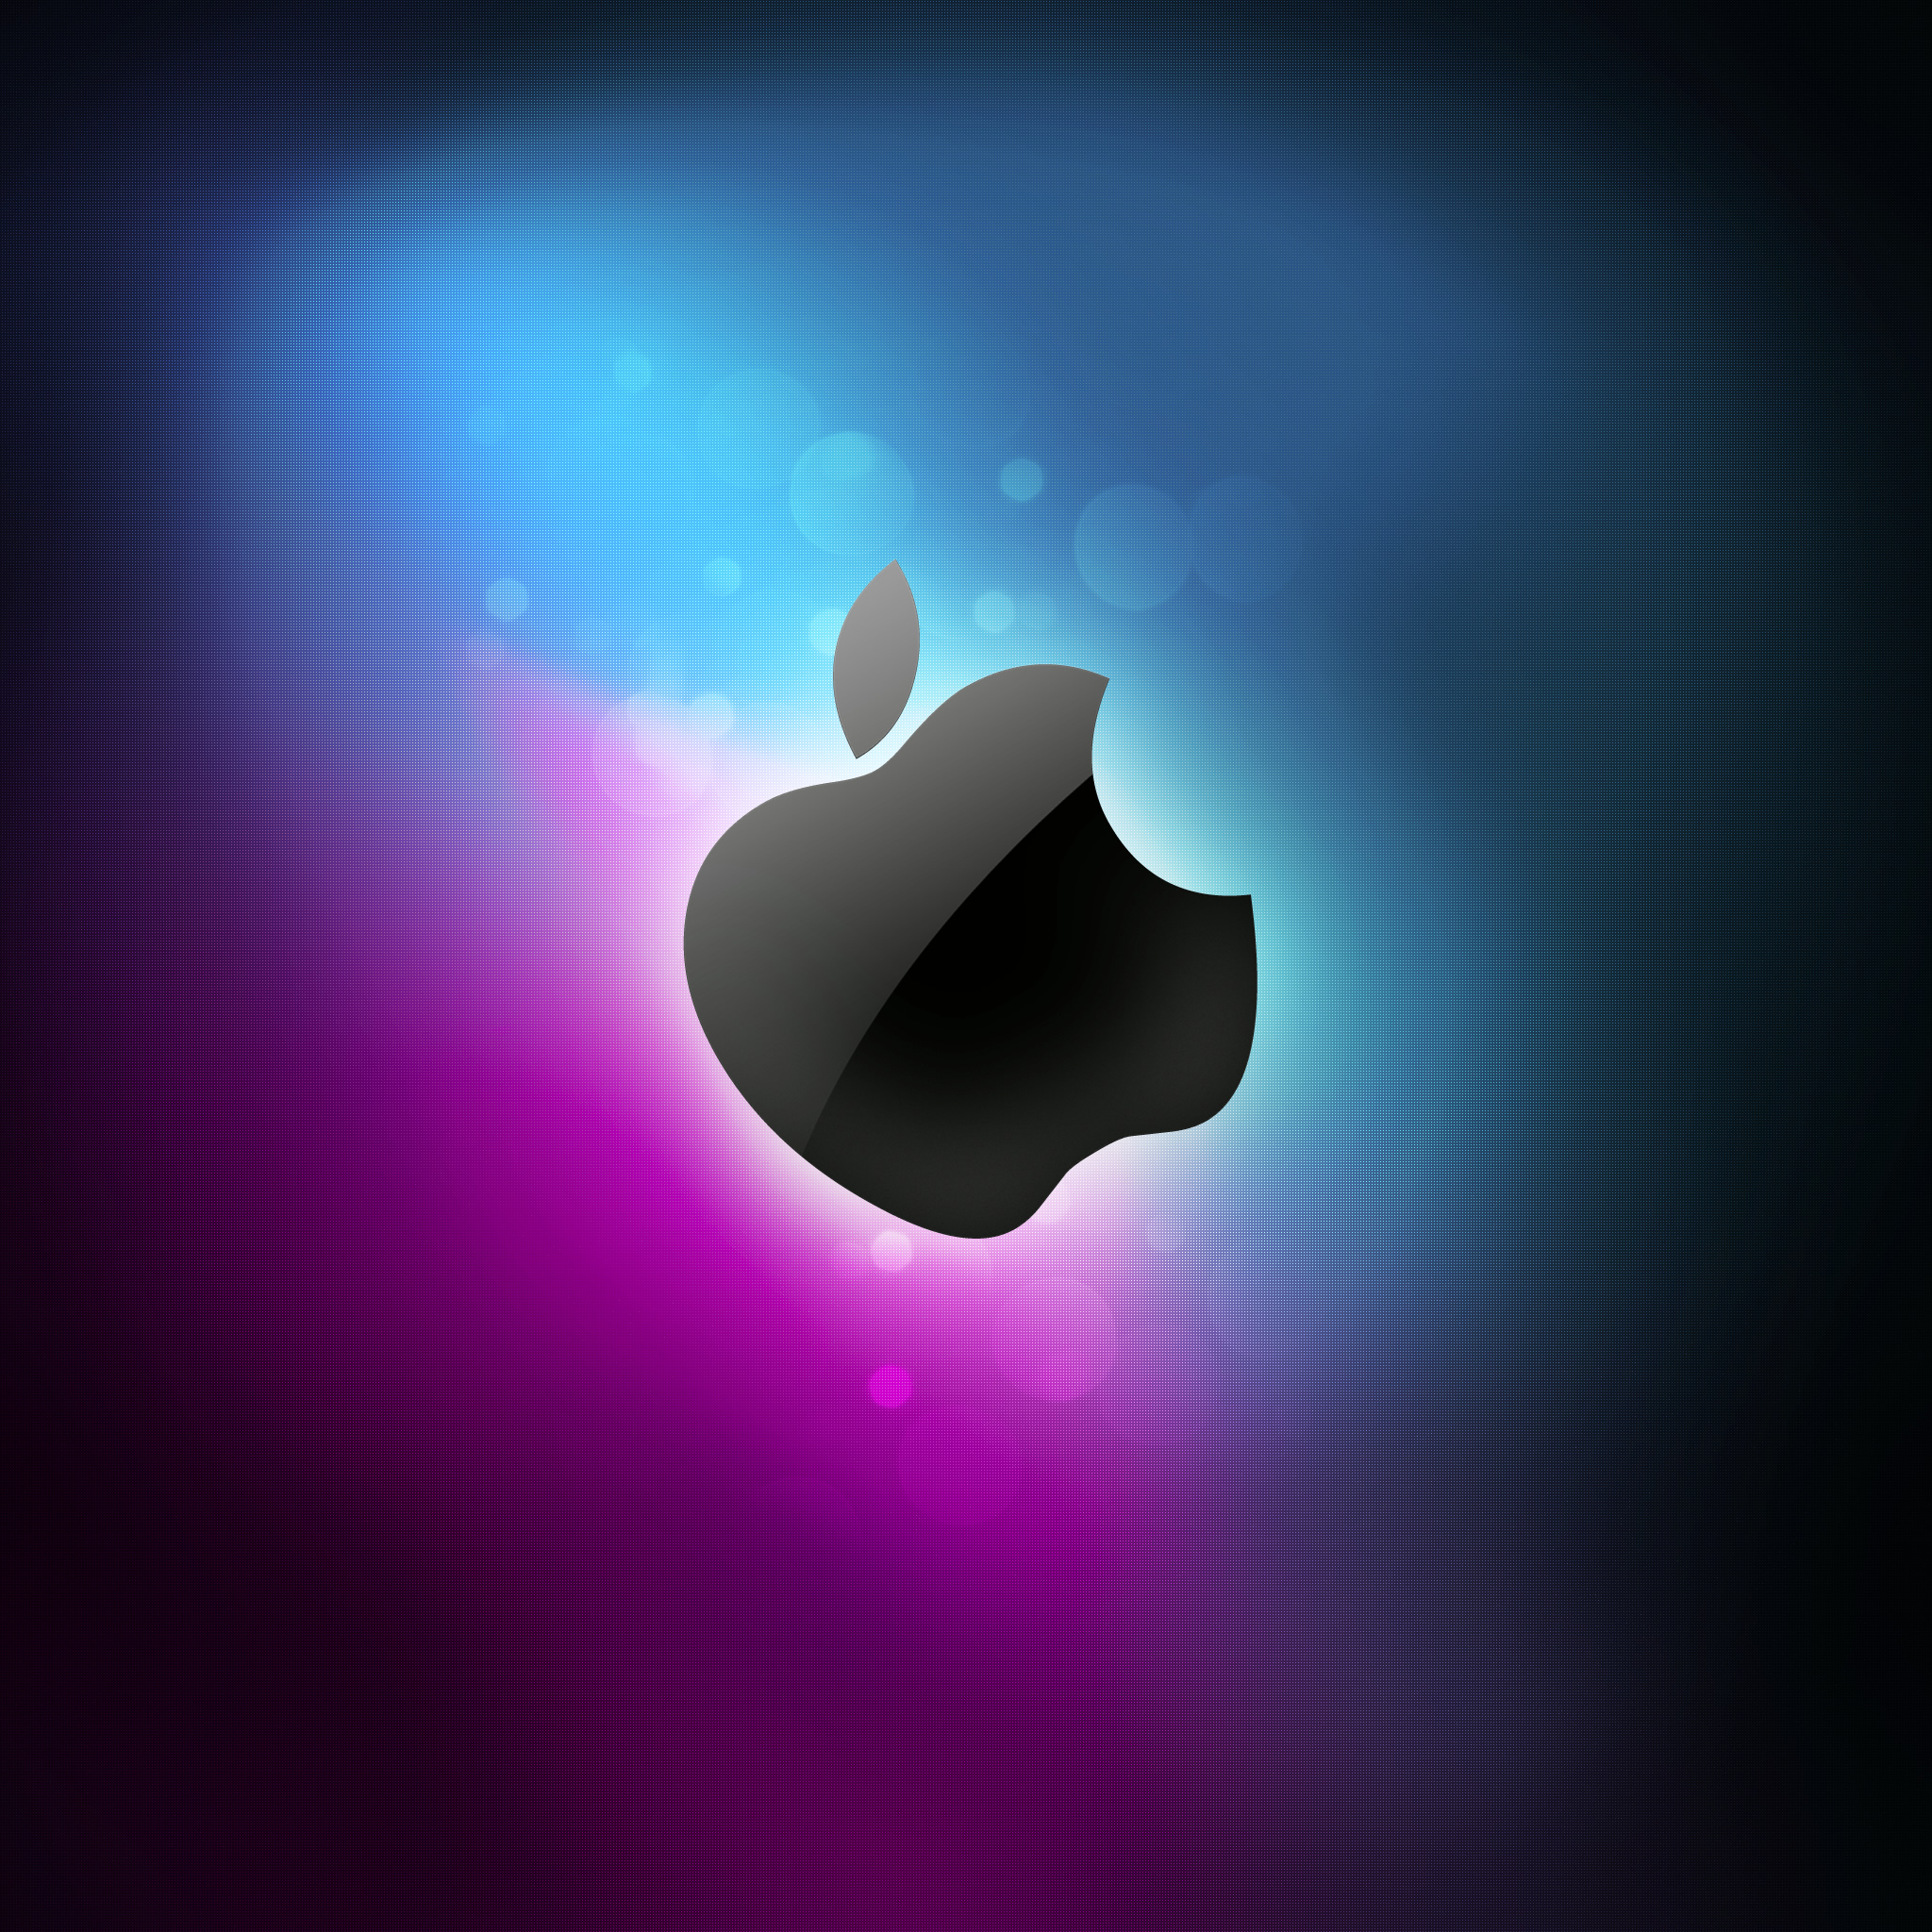 Apple Logo iPad Air Wallpaper Download iPhone Wallpapers iPad